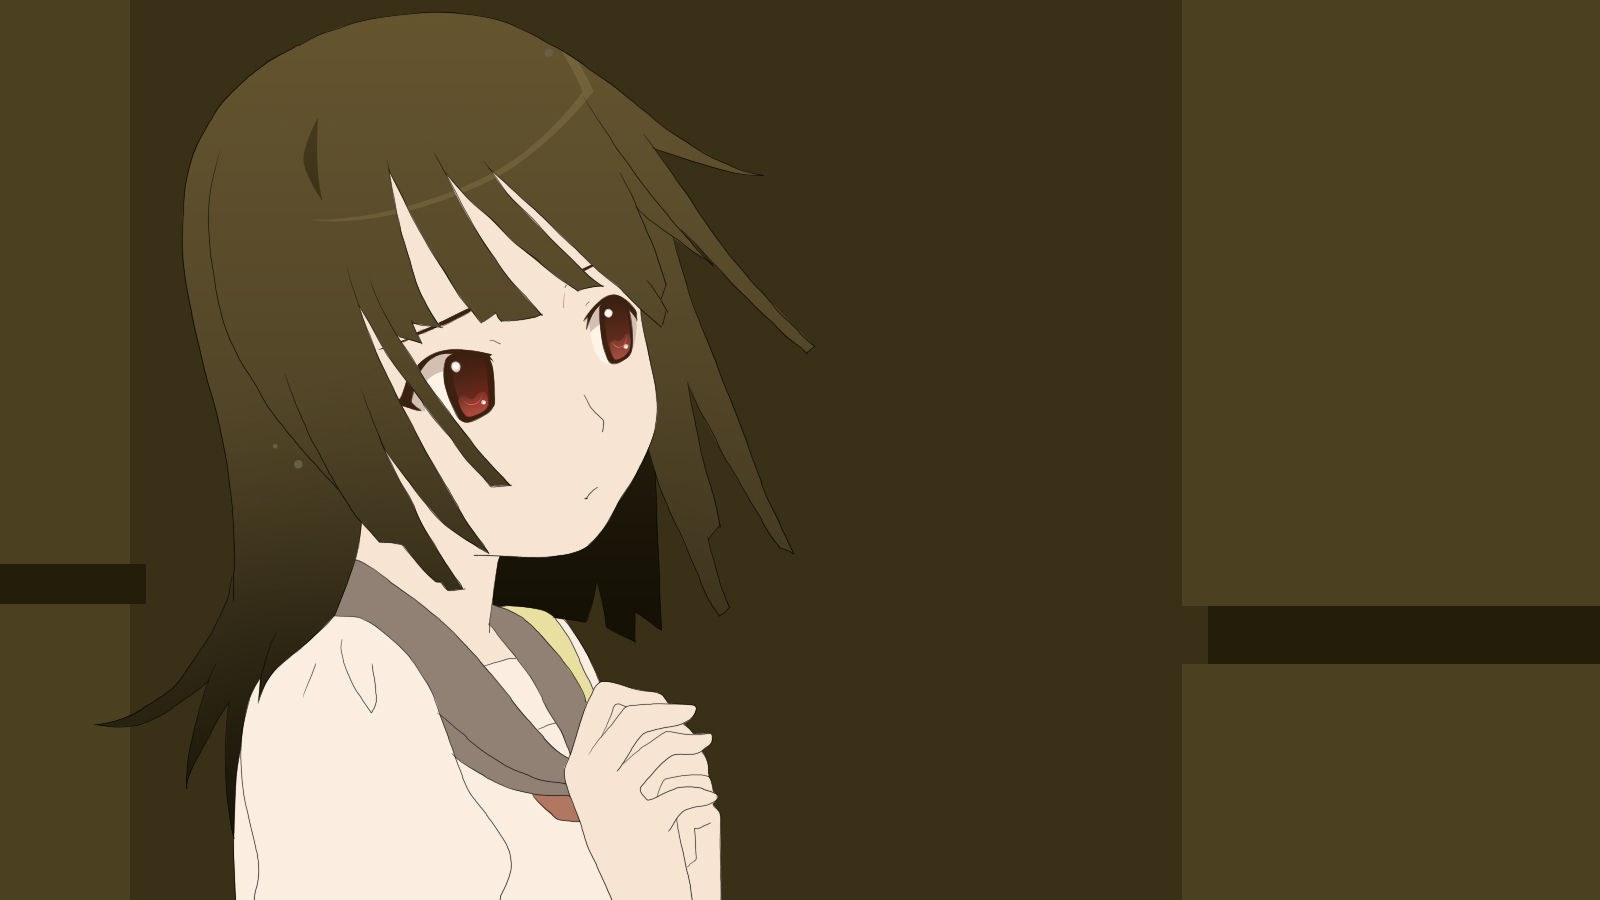 Descarga gratuita de fondo de pantalla para móvil de Animado, Monogatari (Serie), Nadeko Sengoku.